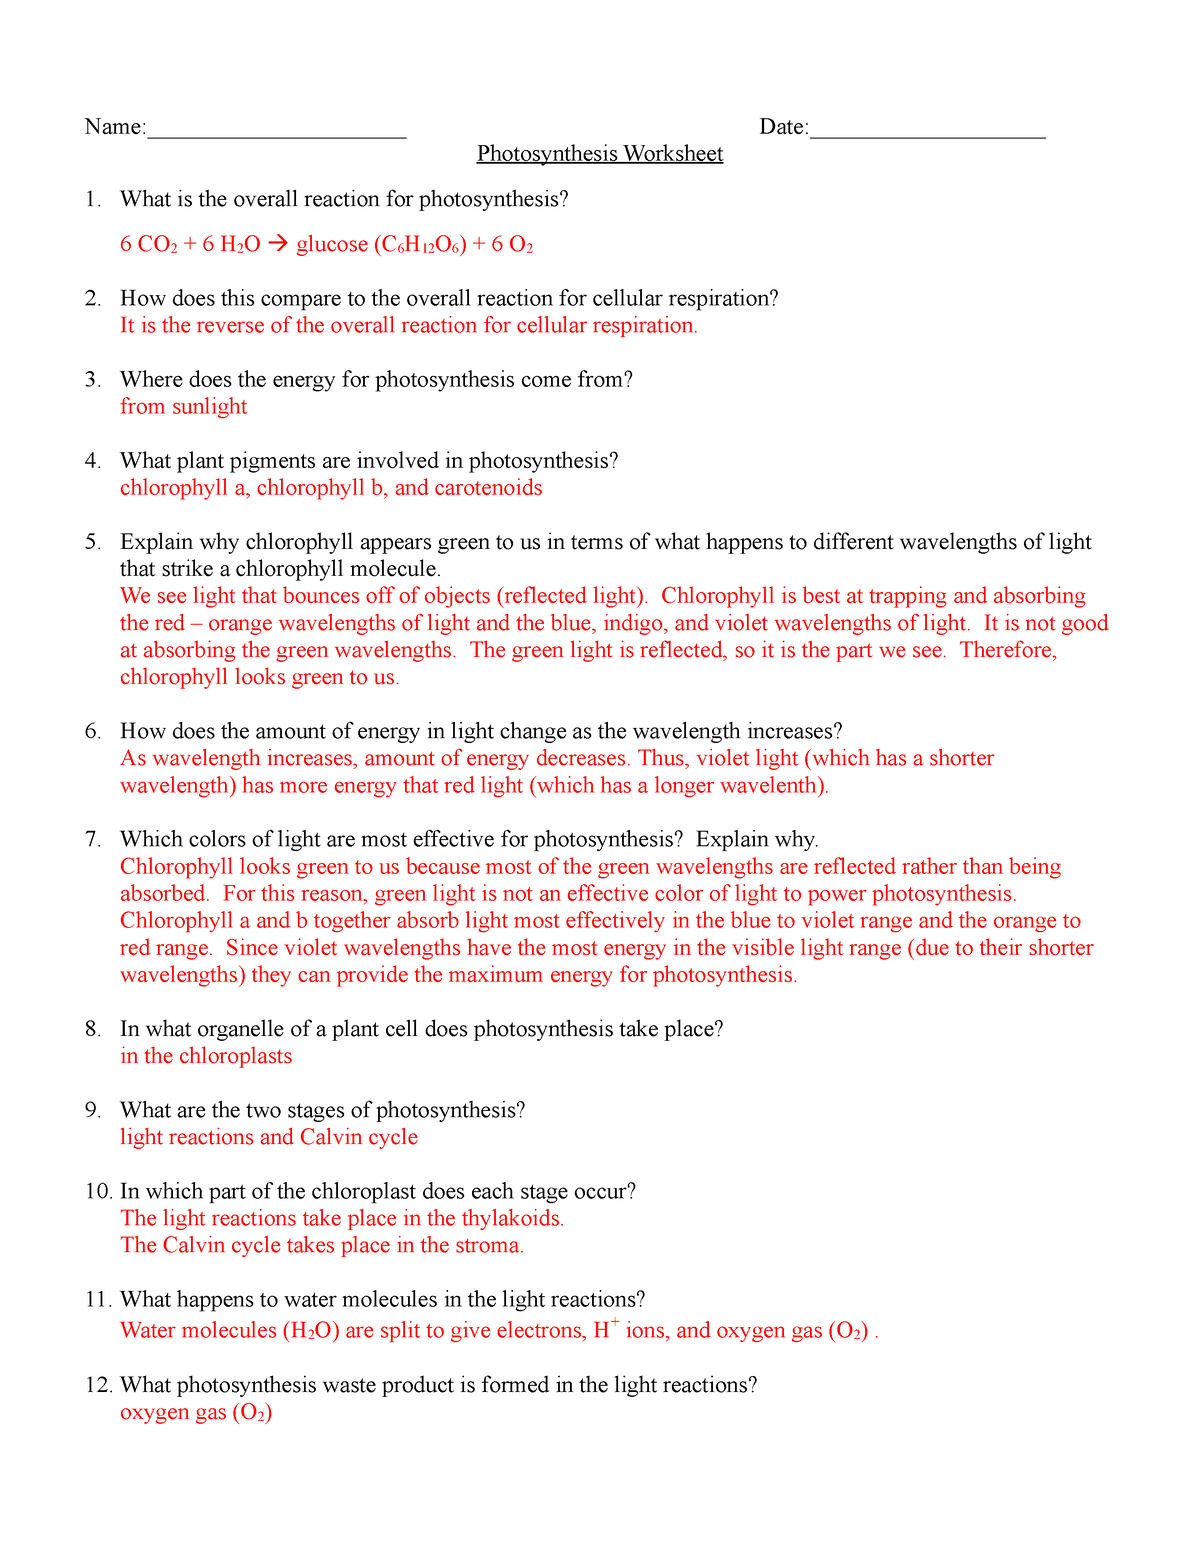 Photosynthesis Summary Worksheet Answers